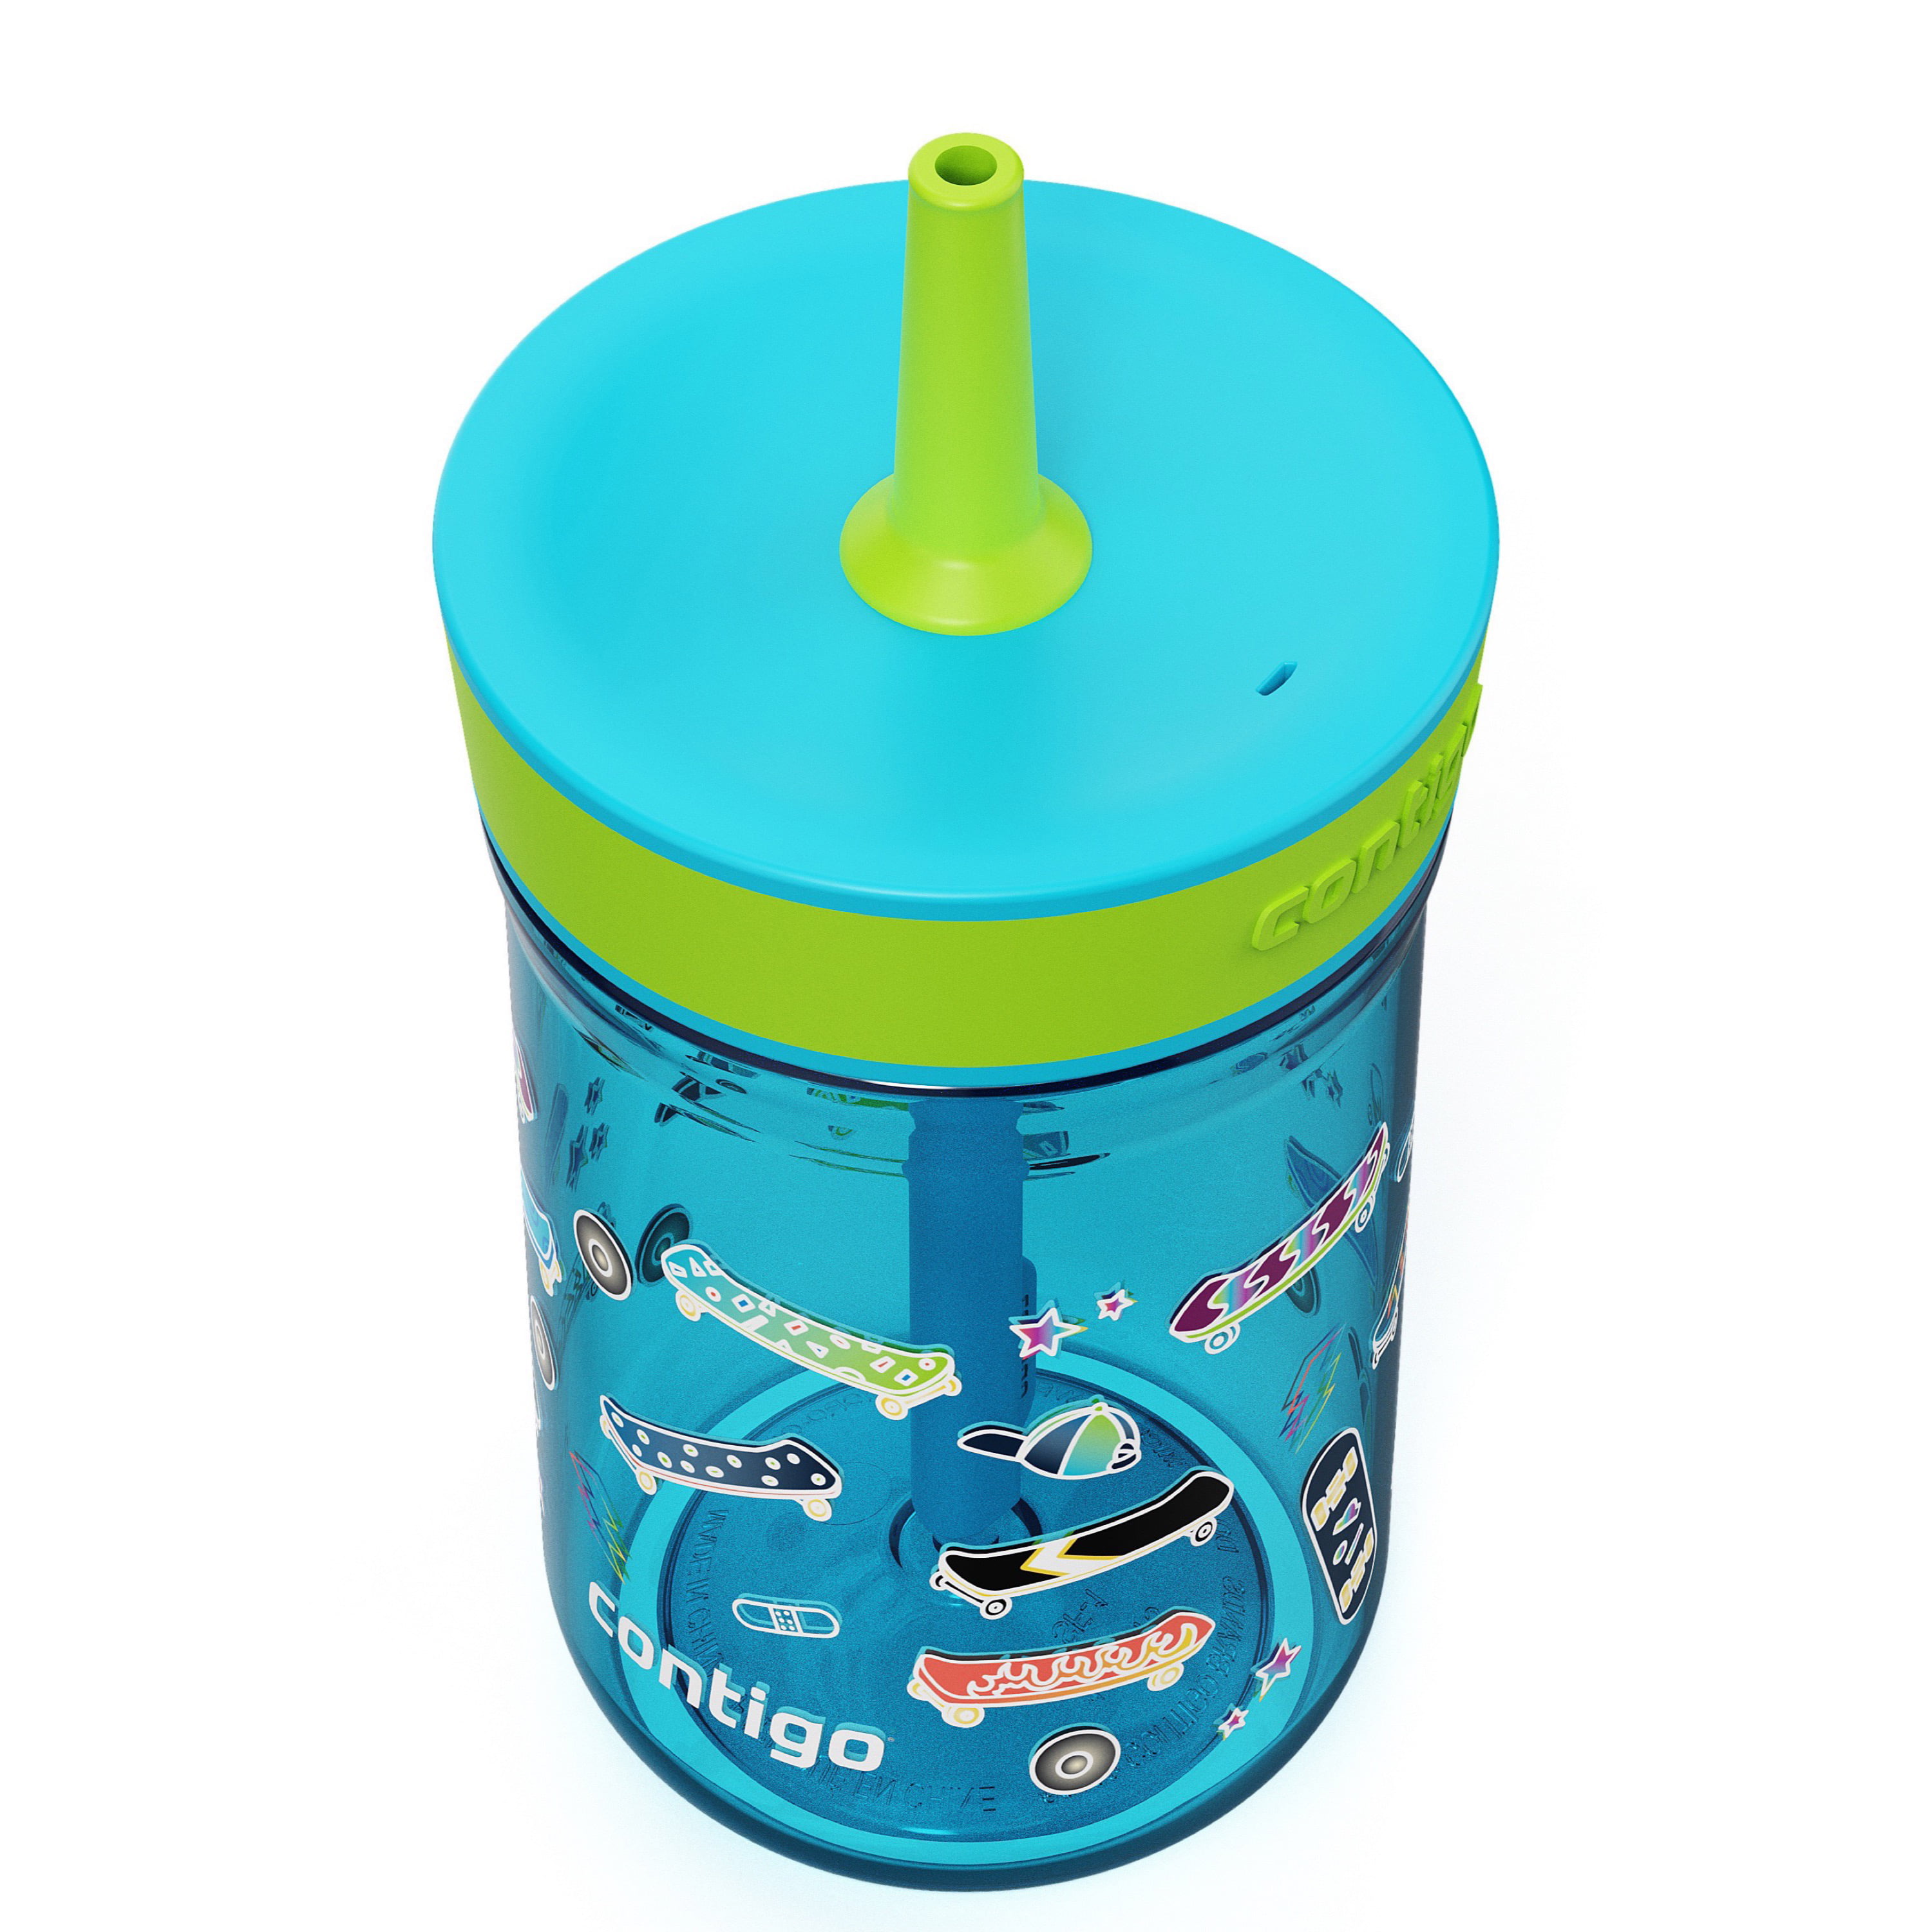 Contigo Kids' Leighton Straw Tumbler with Spill-Proof Leak-Proof Lid, 14  oz. 